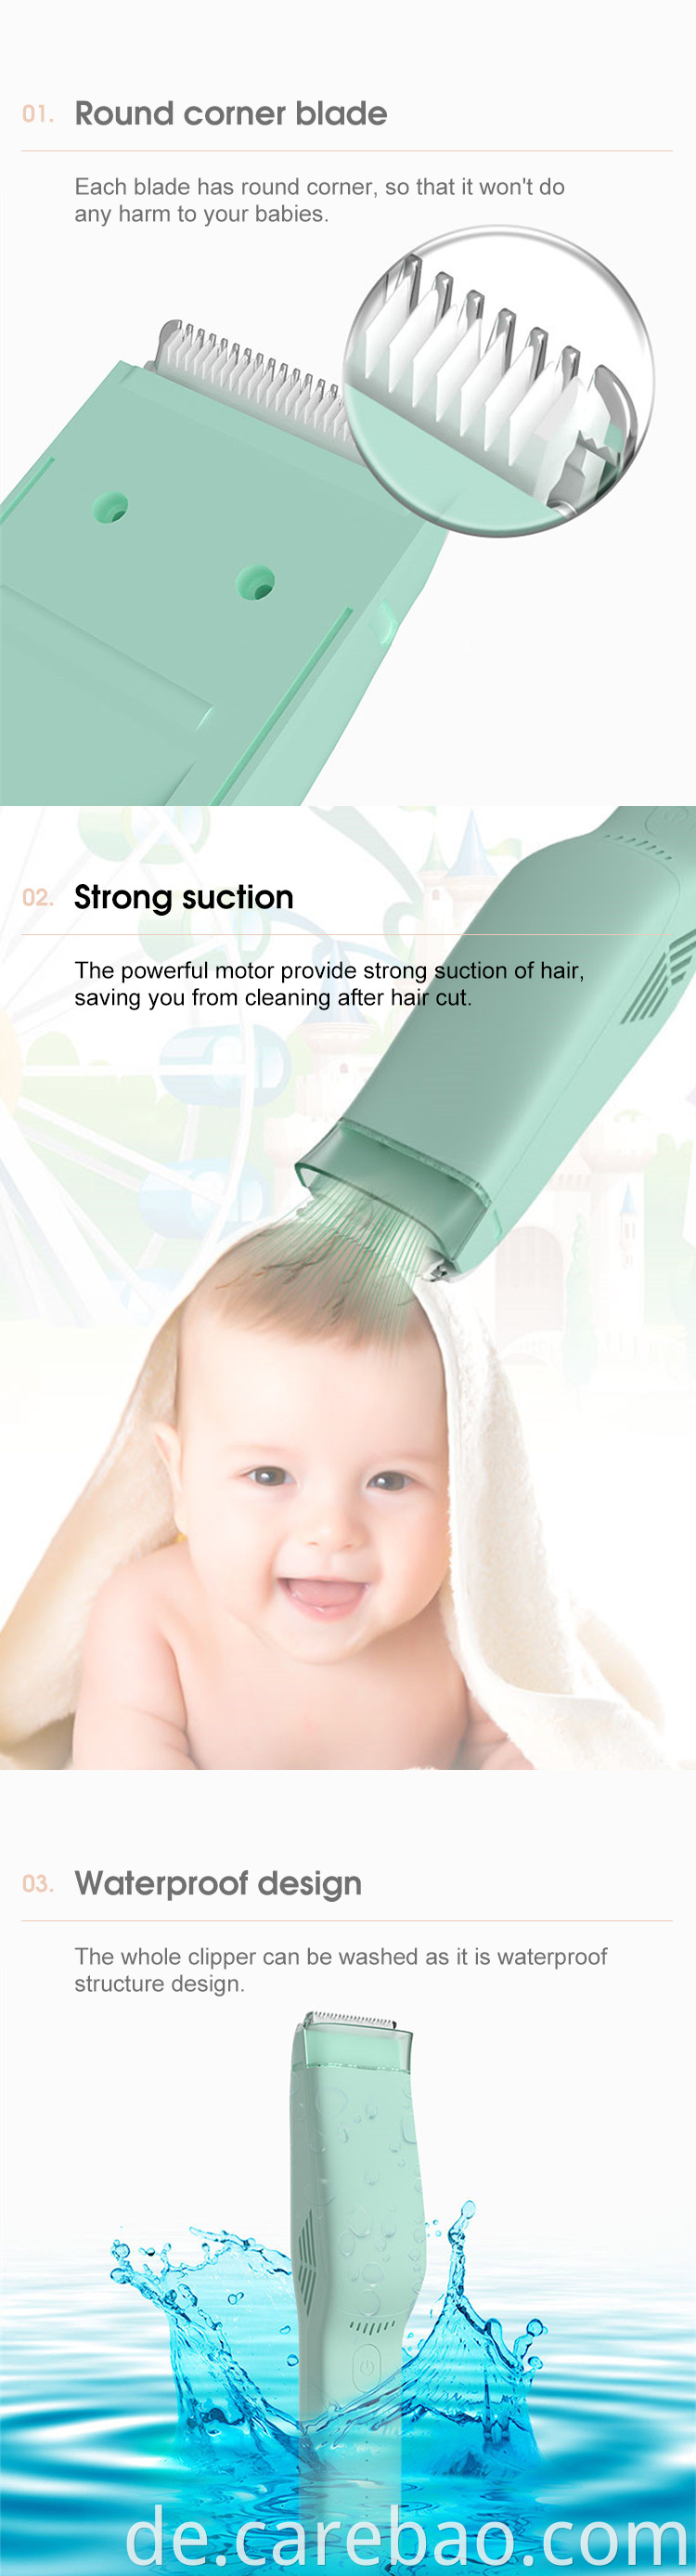 Vacuum Auto Sucking Baby Hair Trimmer